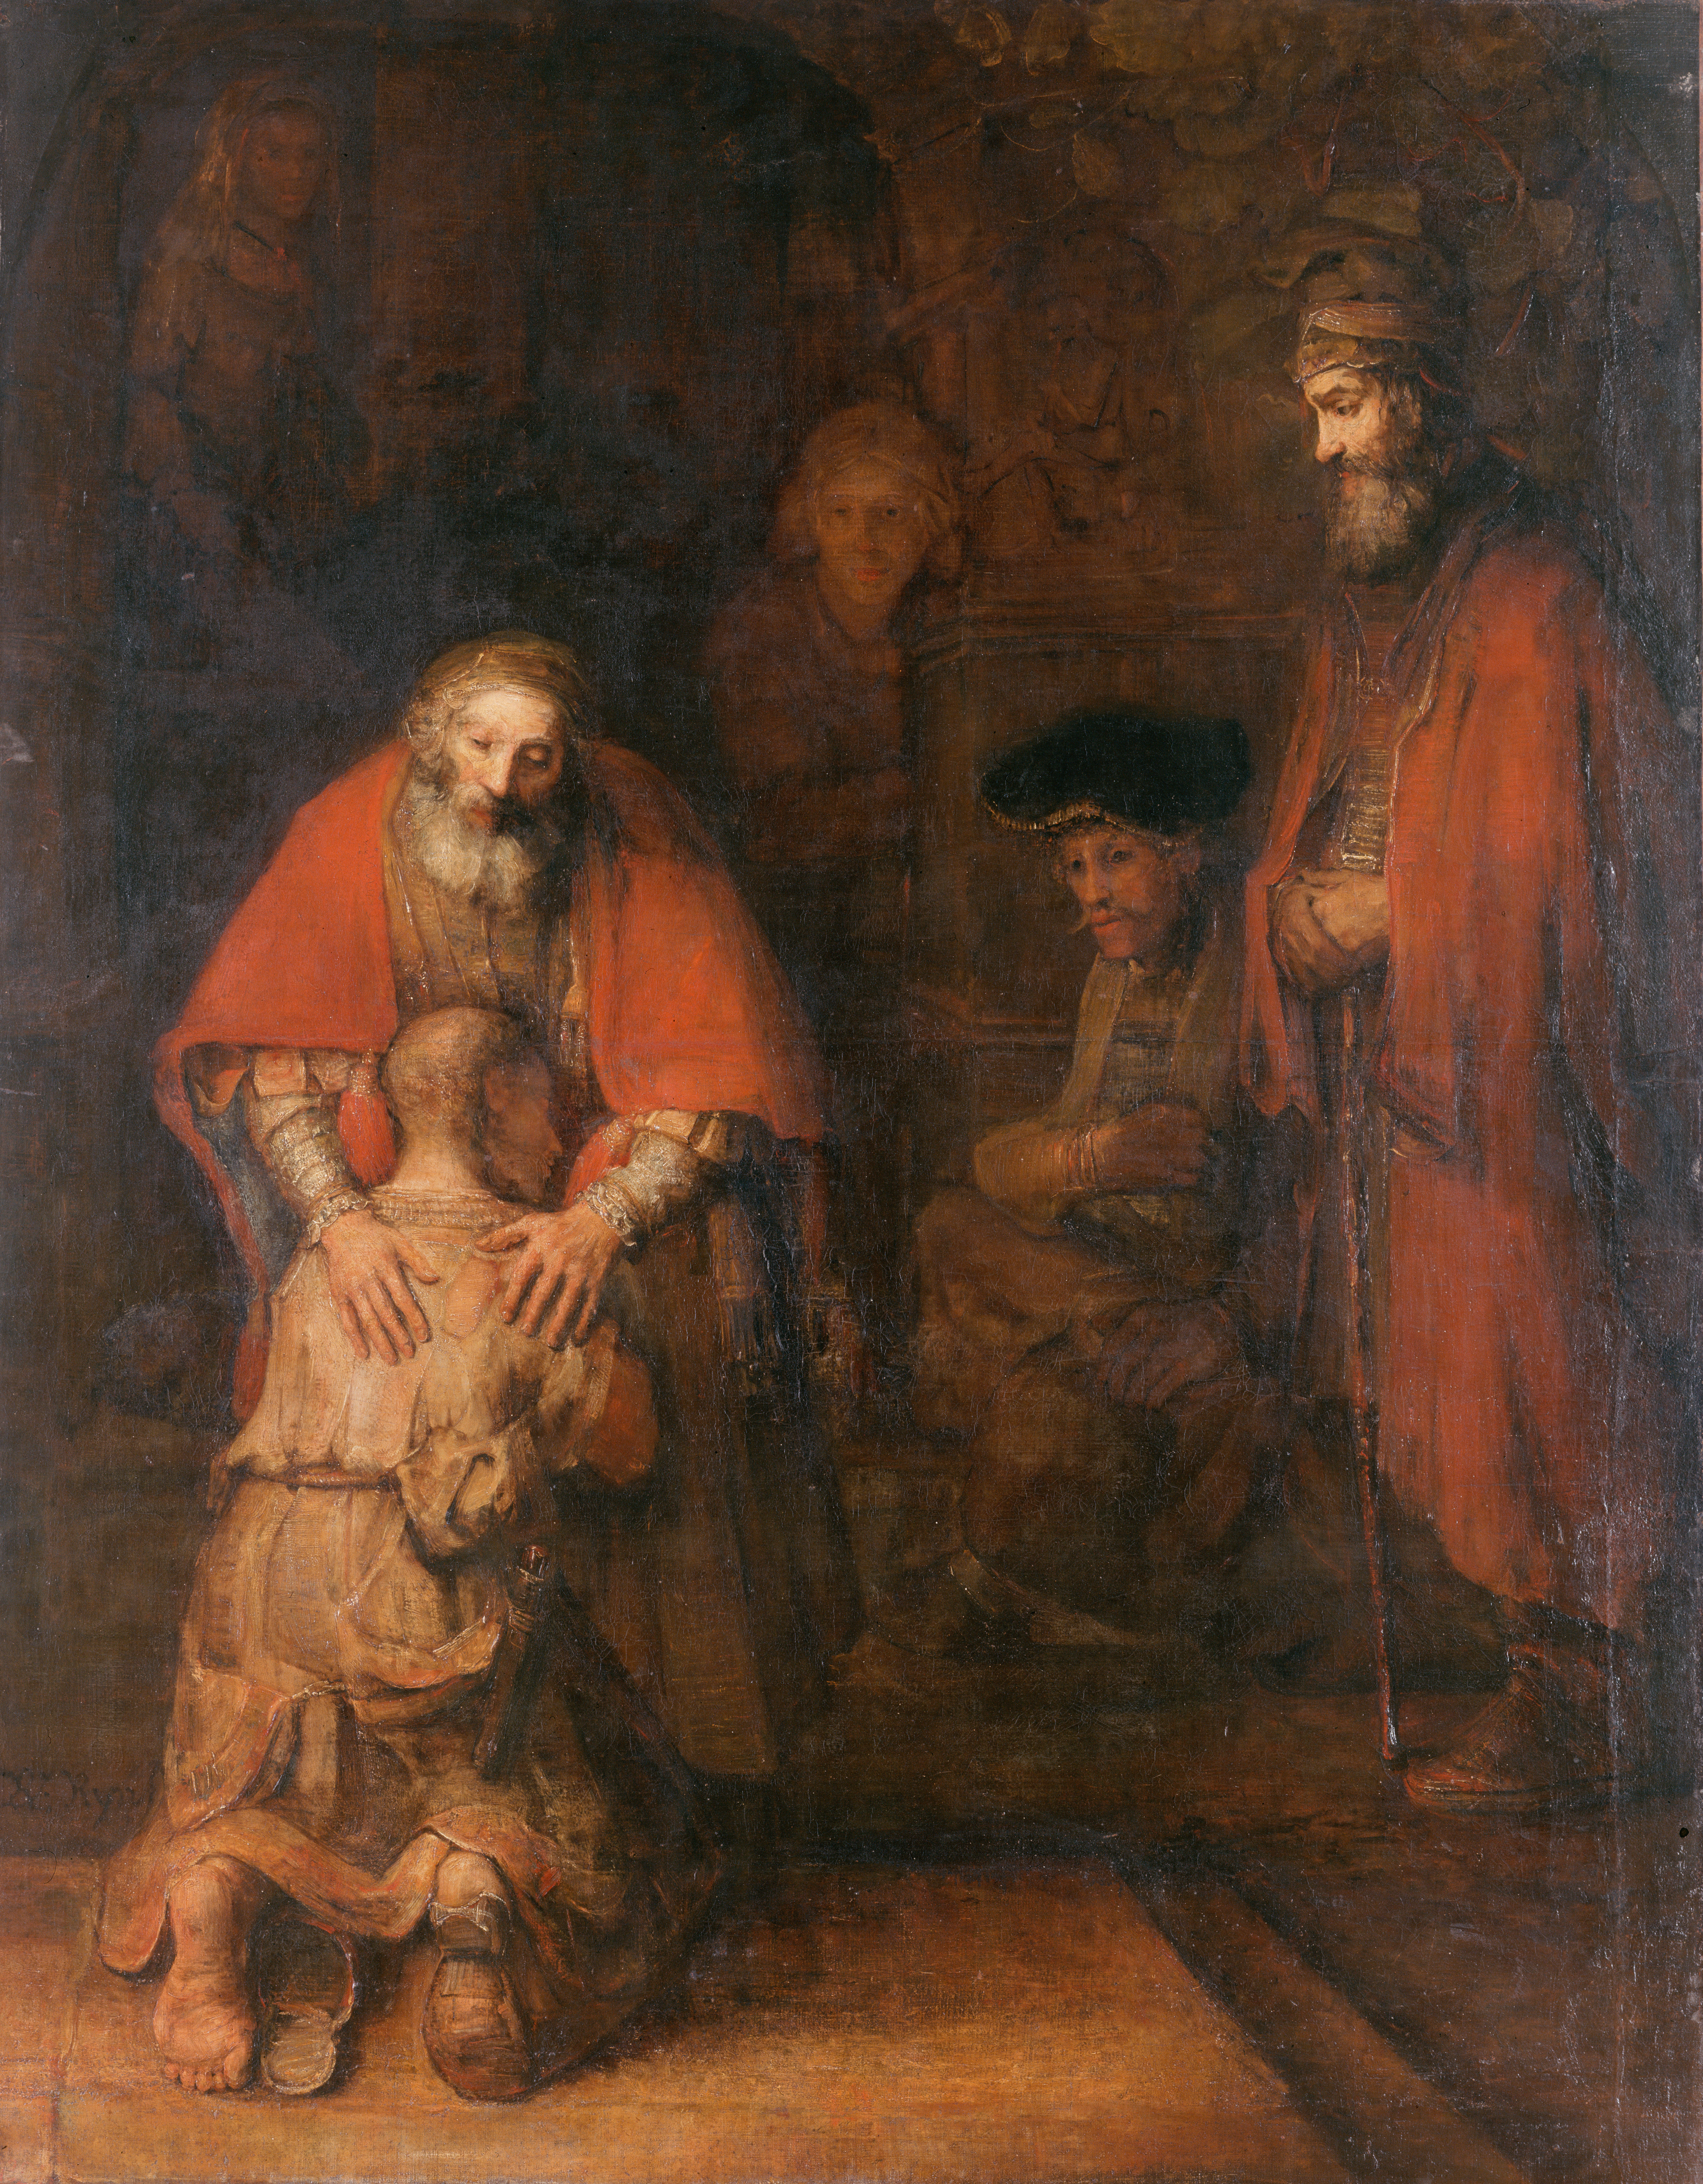 http://upload.wikimedia.org/wikipedia/commons/9/91/Rembrandt_Harmensz._van_Rijn_-_The_Return_of_the_Prodigal_Son.jpg